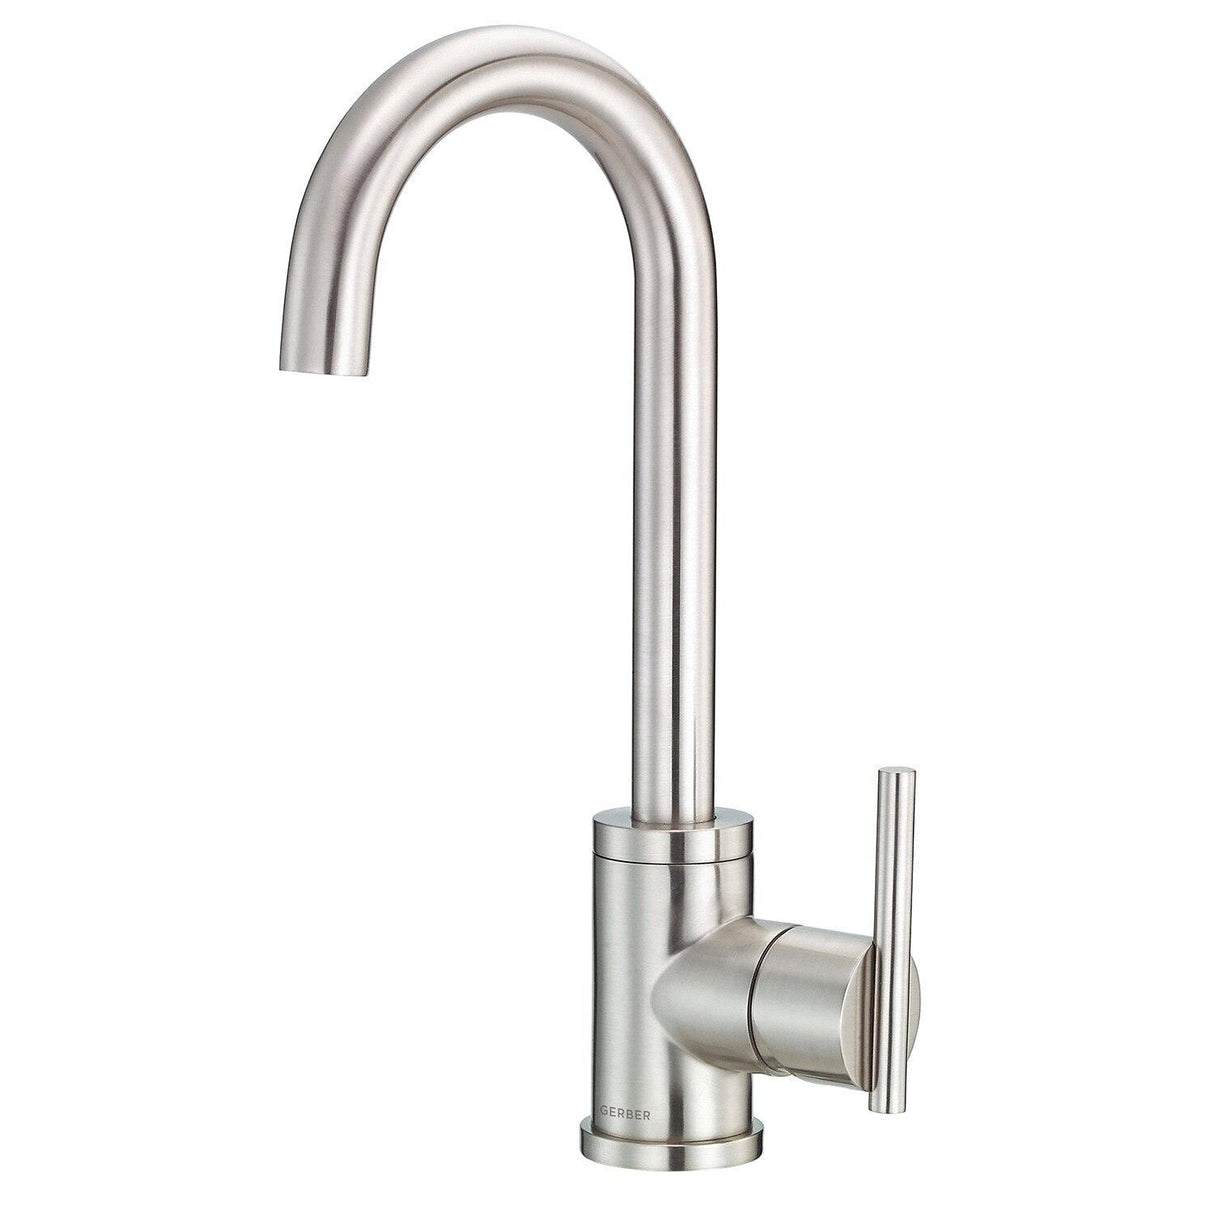 Gerber D150558 Chrome Parma Single Handle Bar Faucet